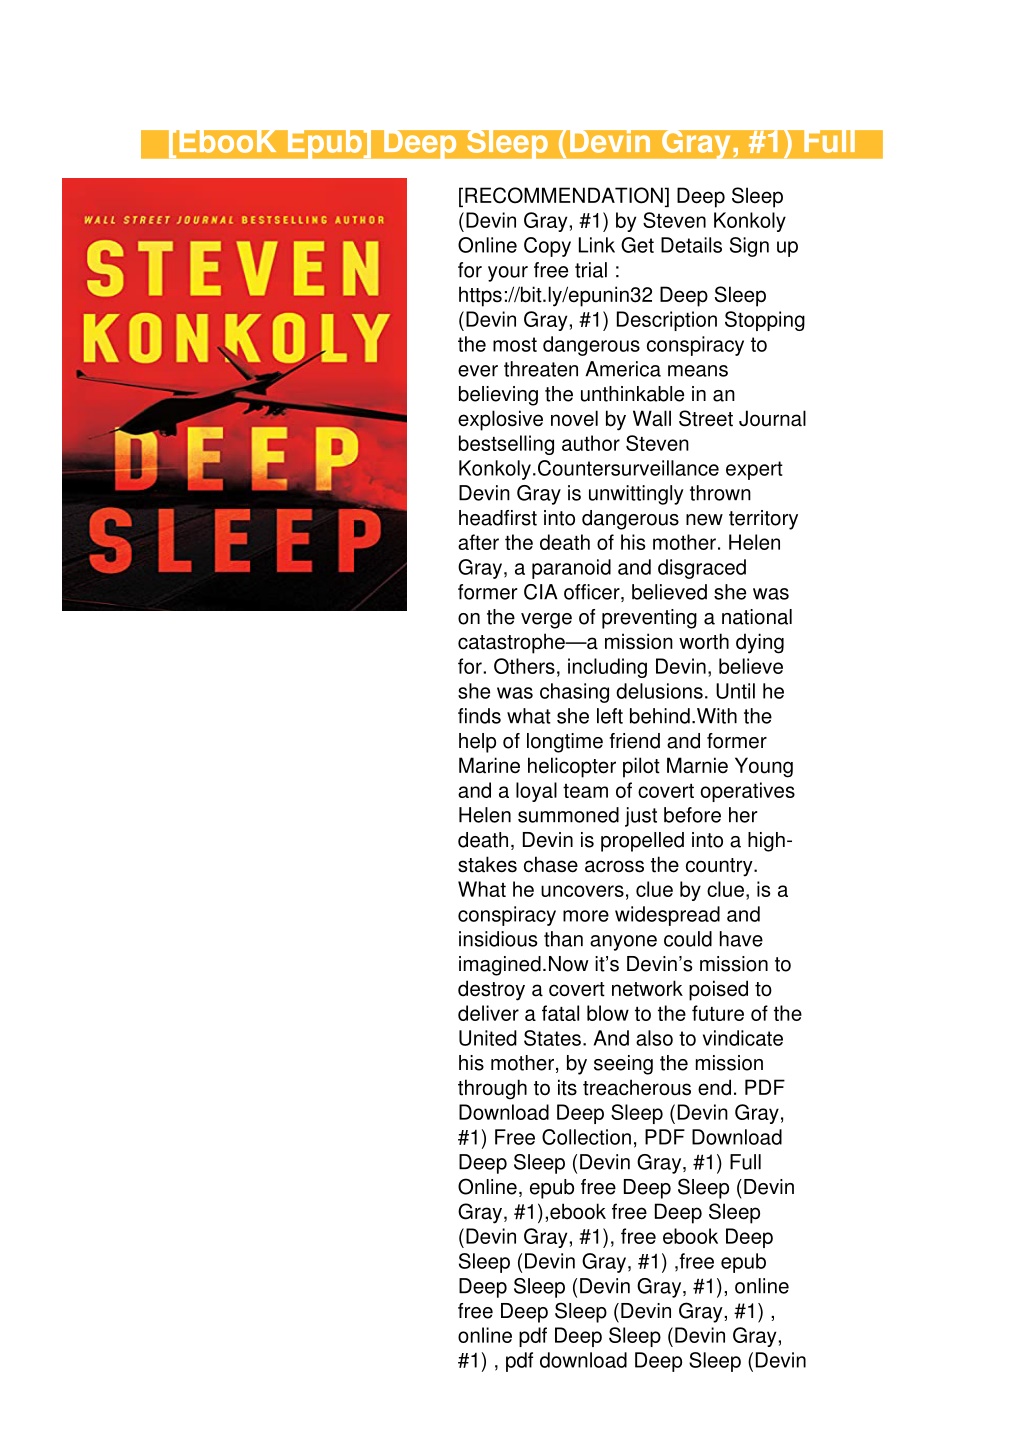 deep sleep steven konkoly review